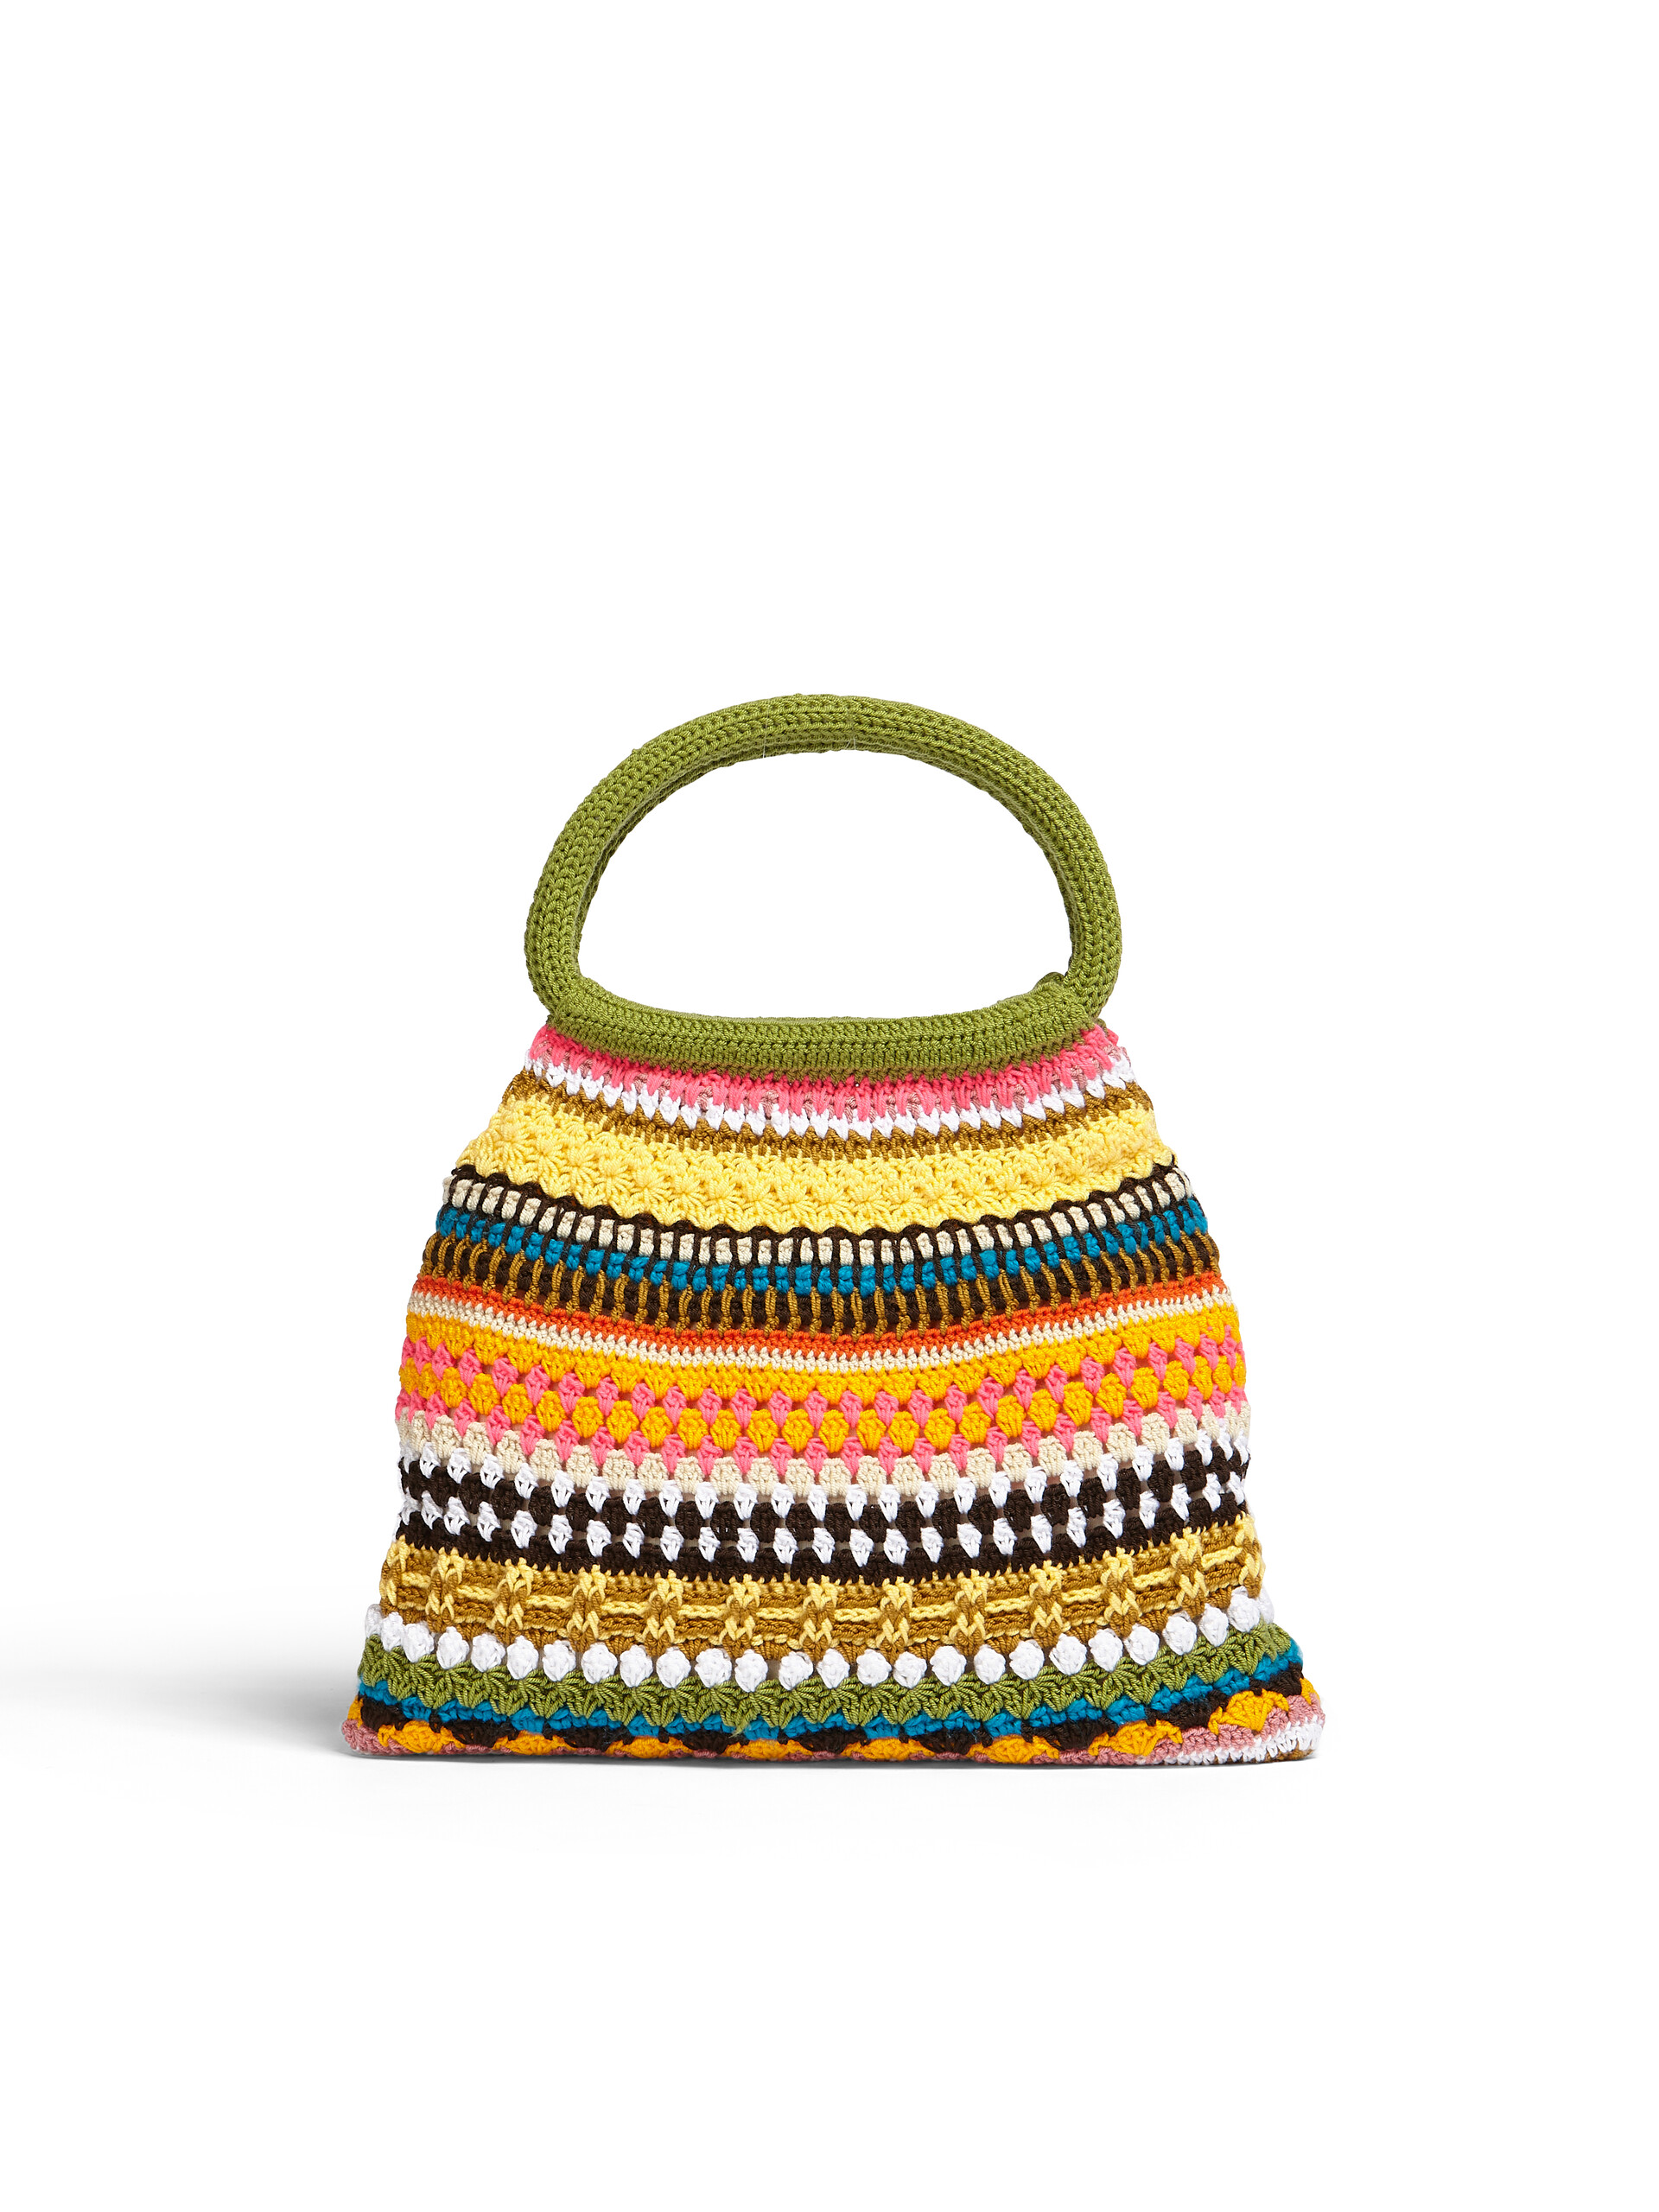 MARNI MARKET bag in green crochet - Furniture - Image 3